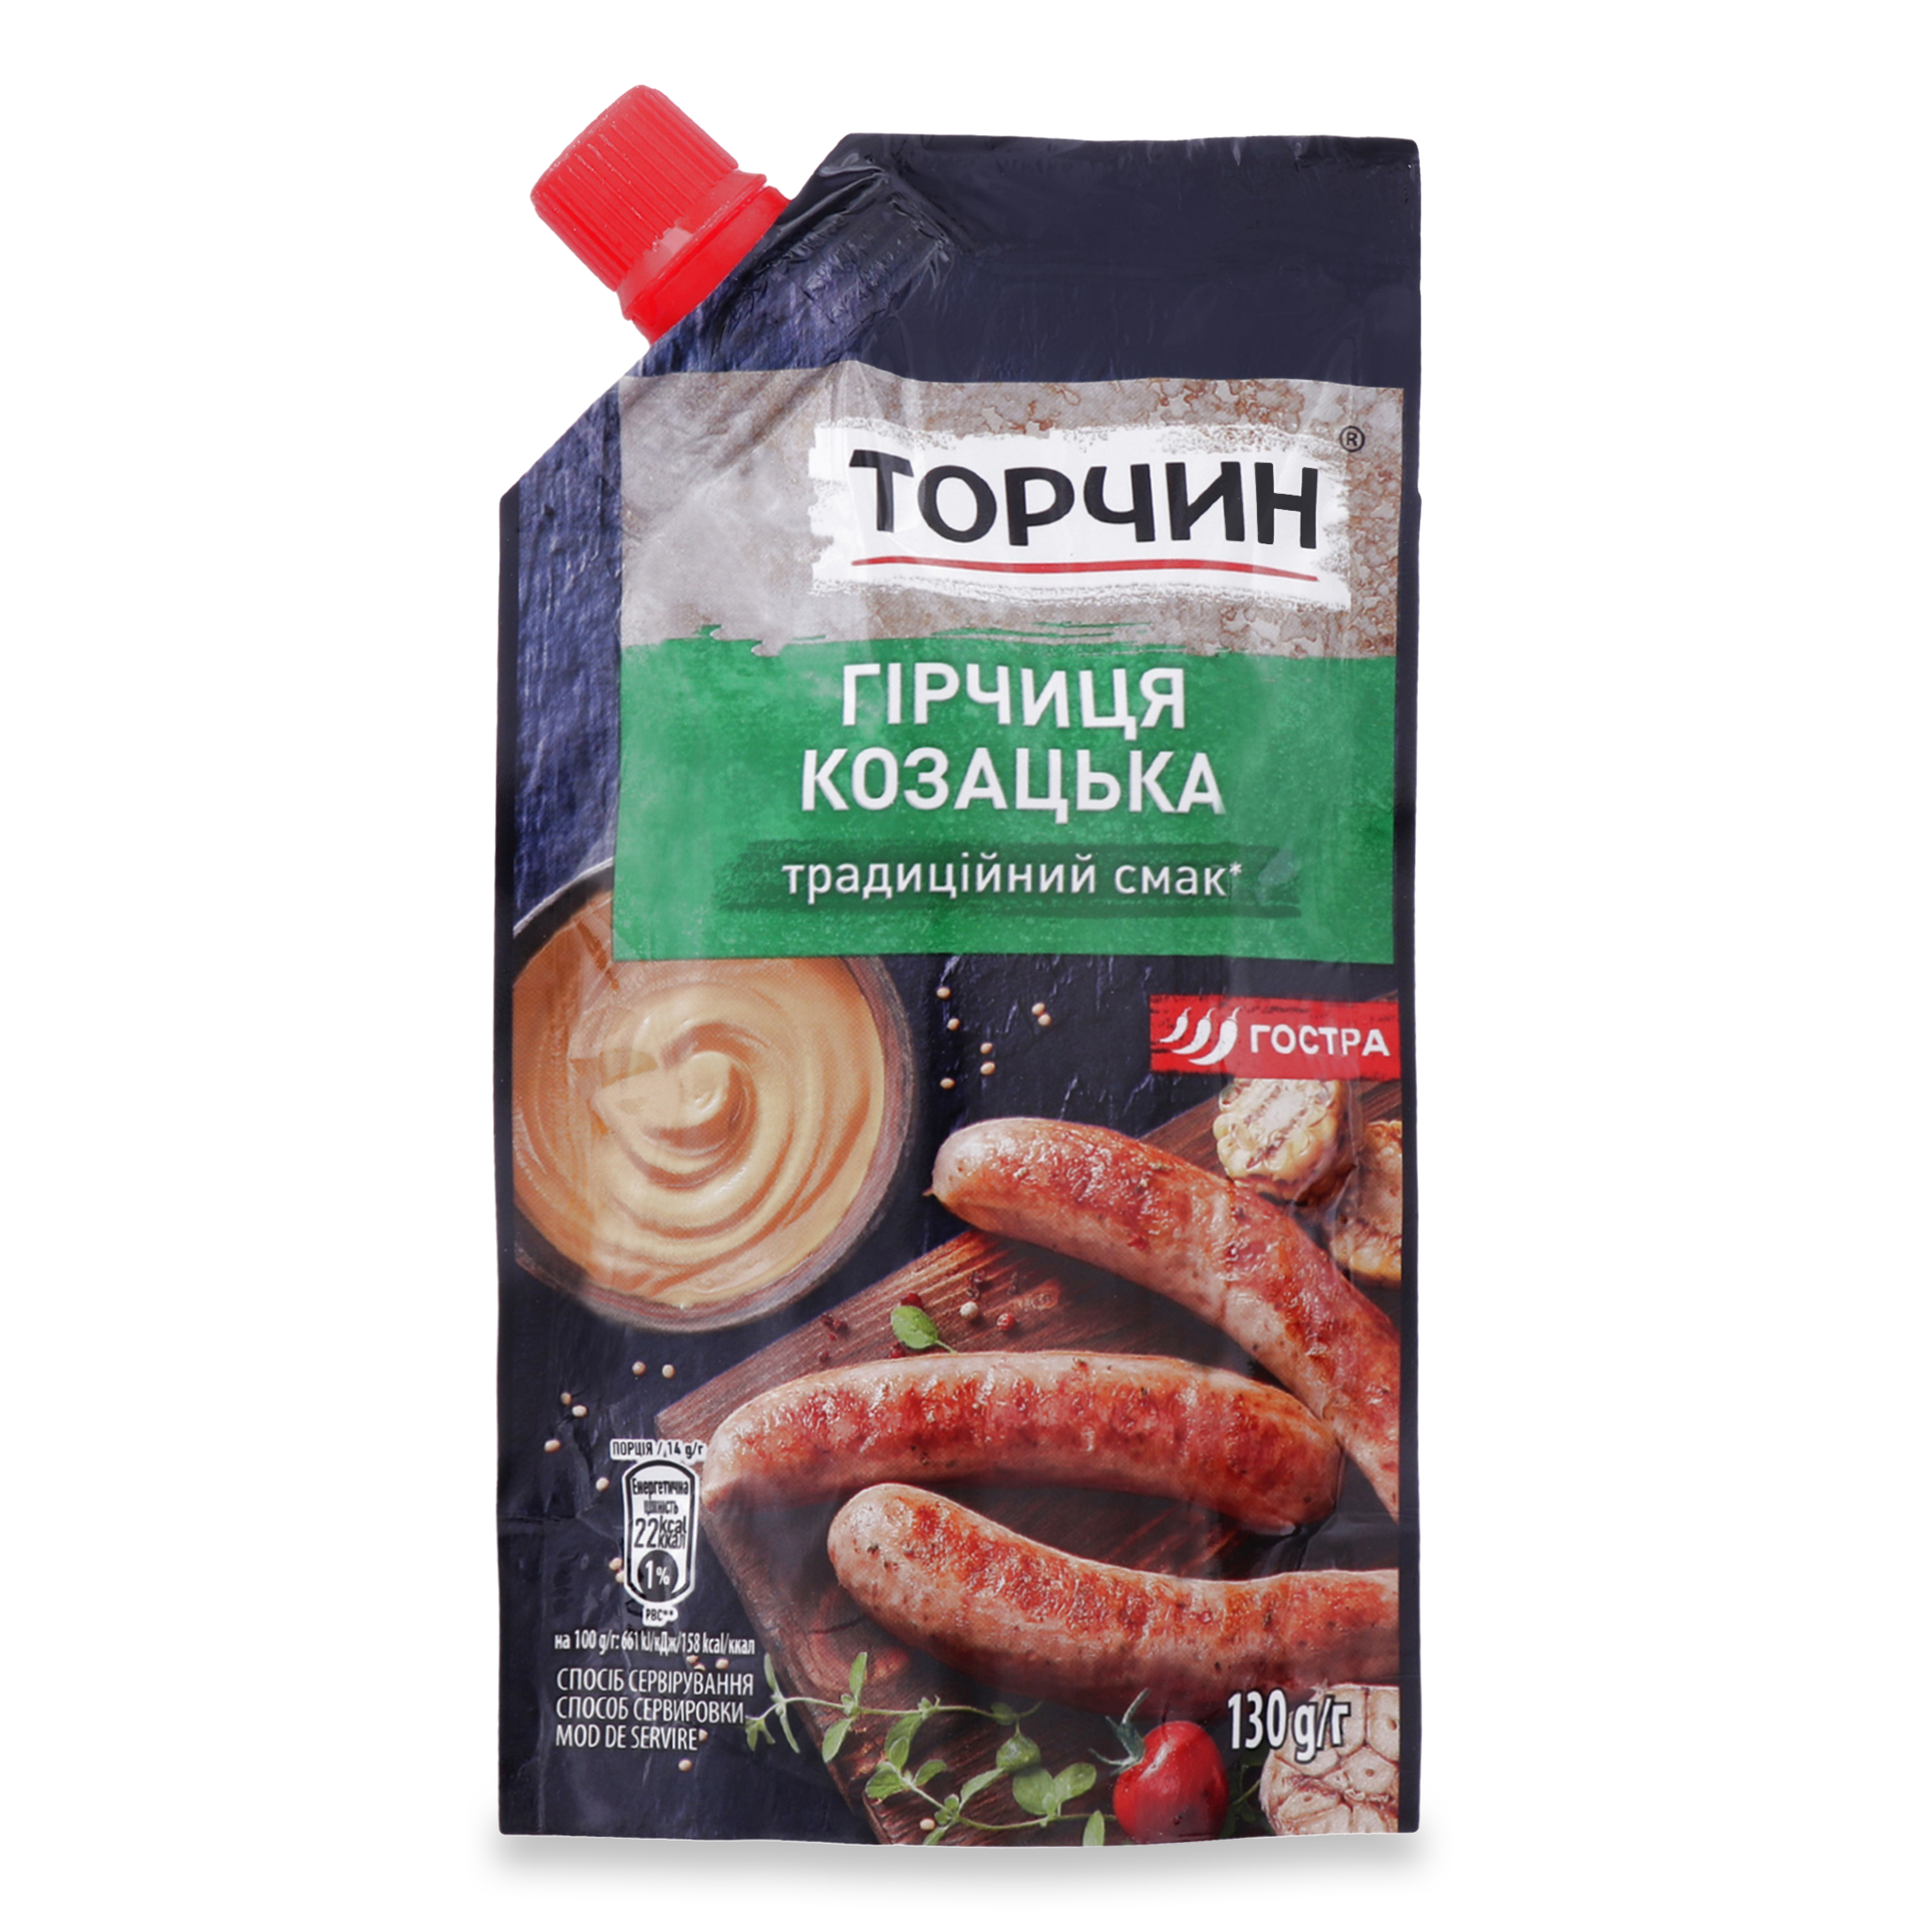 Torchyn Kozatska mustard 130g